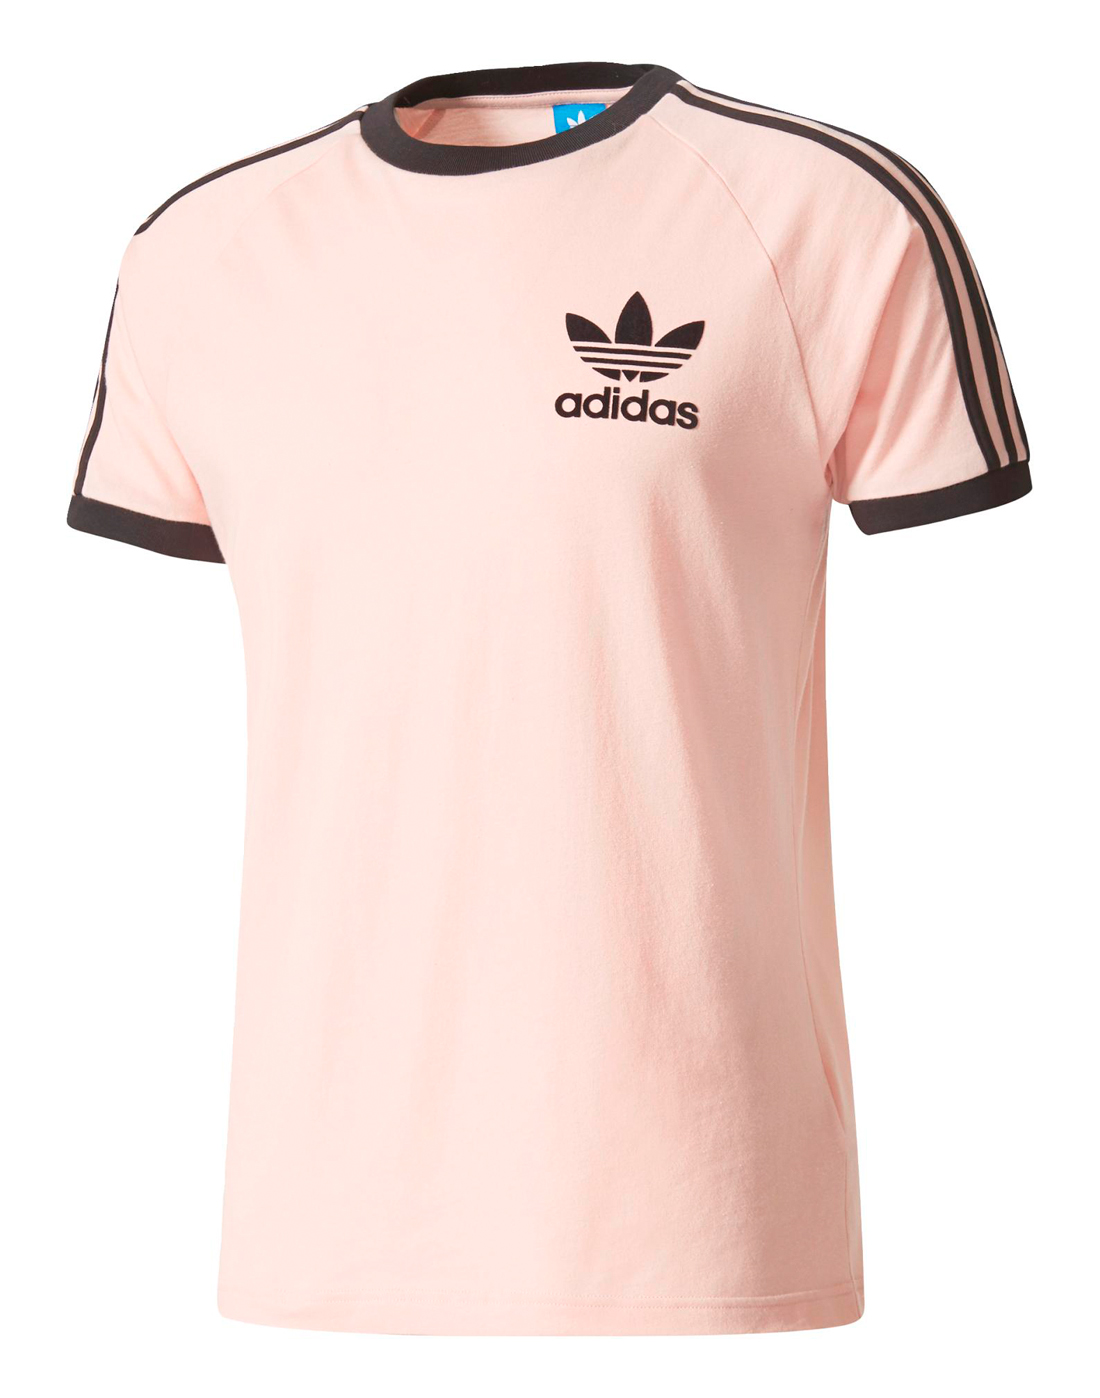 adidas california t shirt pink